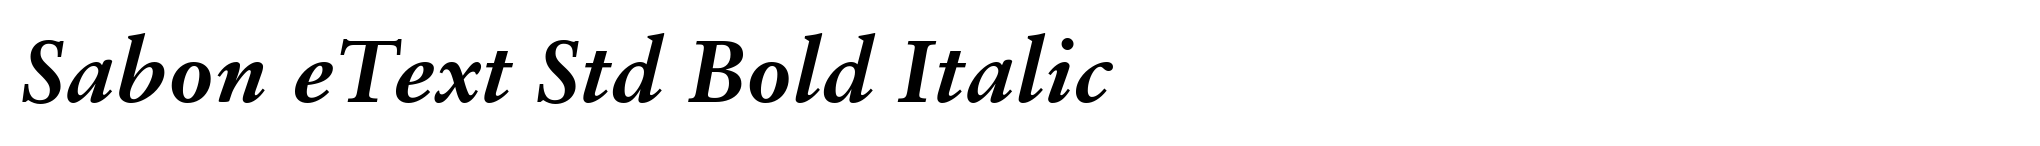 Sabon eText Std Bold Italic image